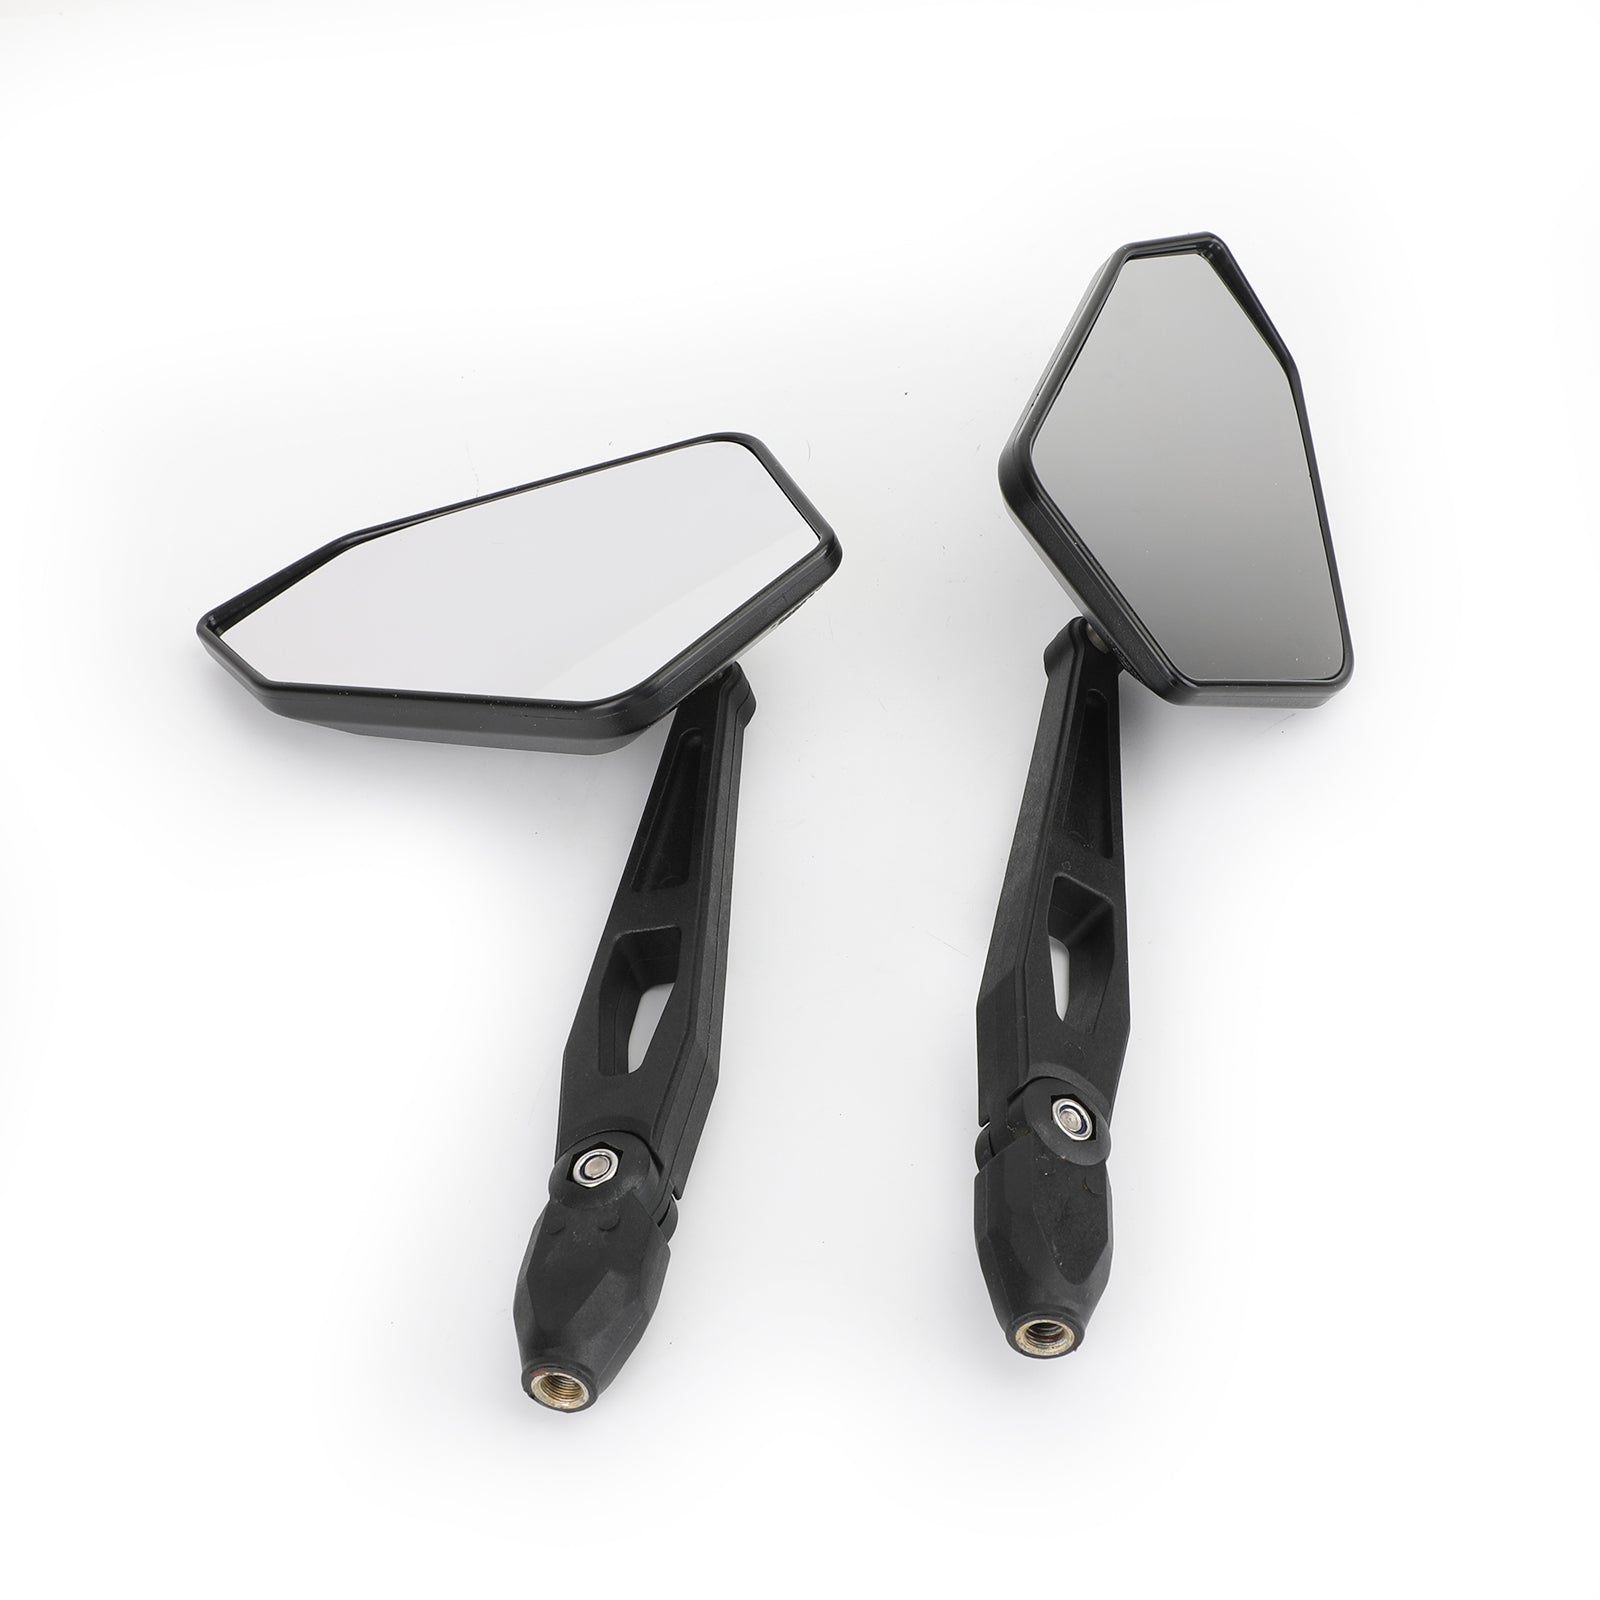 Rear View Mirrors Pair Fit For Honda CTX700 2012-2016 VTR250 MC33 1998-2007 CBF1000 2006-2010 Black